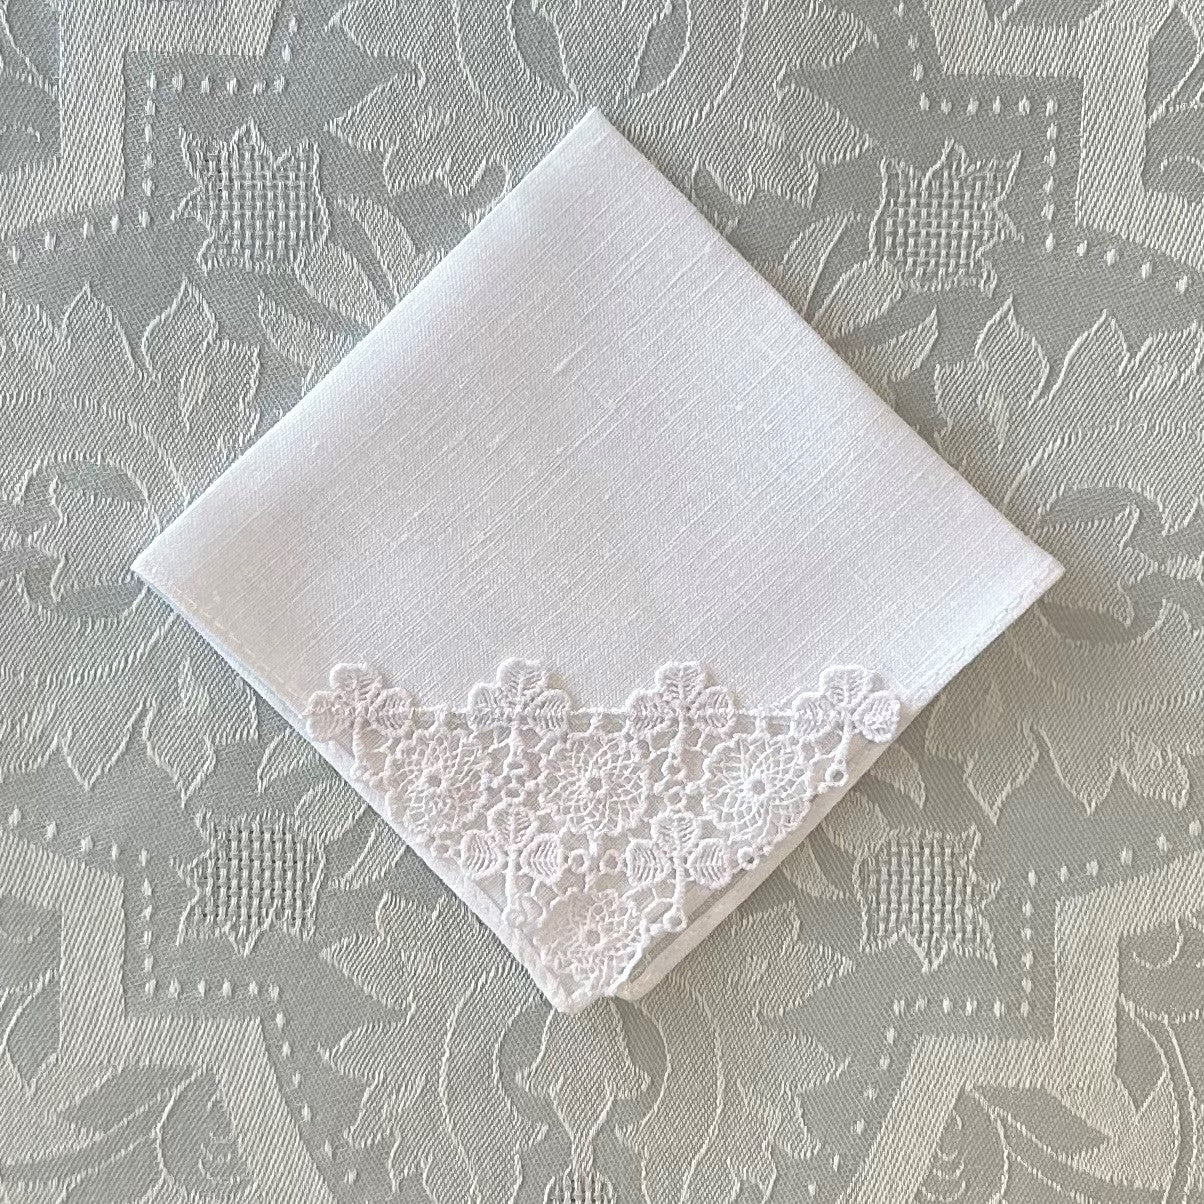 Handkerchief Ladies - White Linen with Crochet Shamrocks and Pinwheels